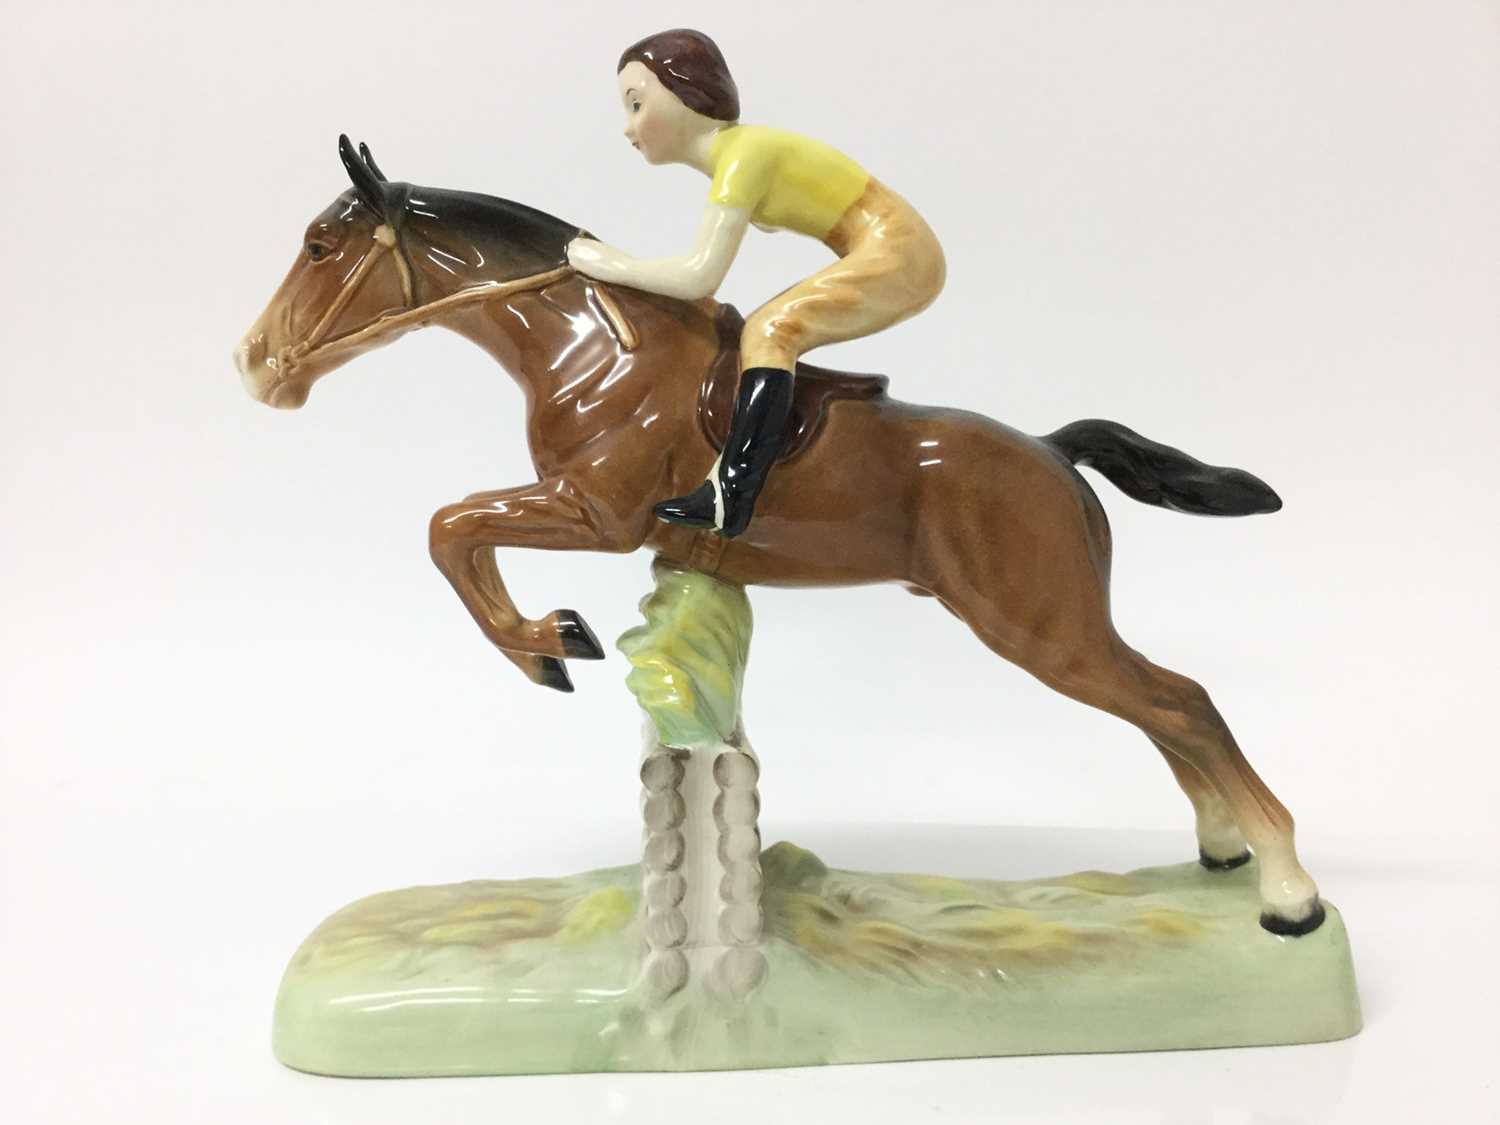 Lot 7 - Beswick Girl on Jumping Horse, model no. 939, designed by Arthur Gredington, 24.7cm in height